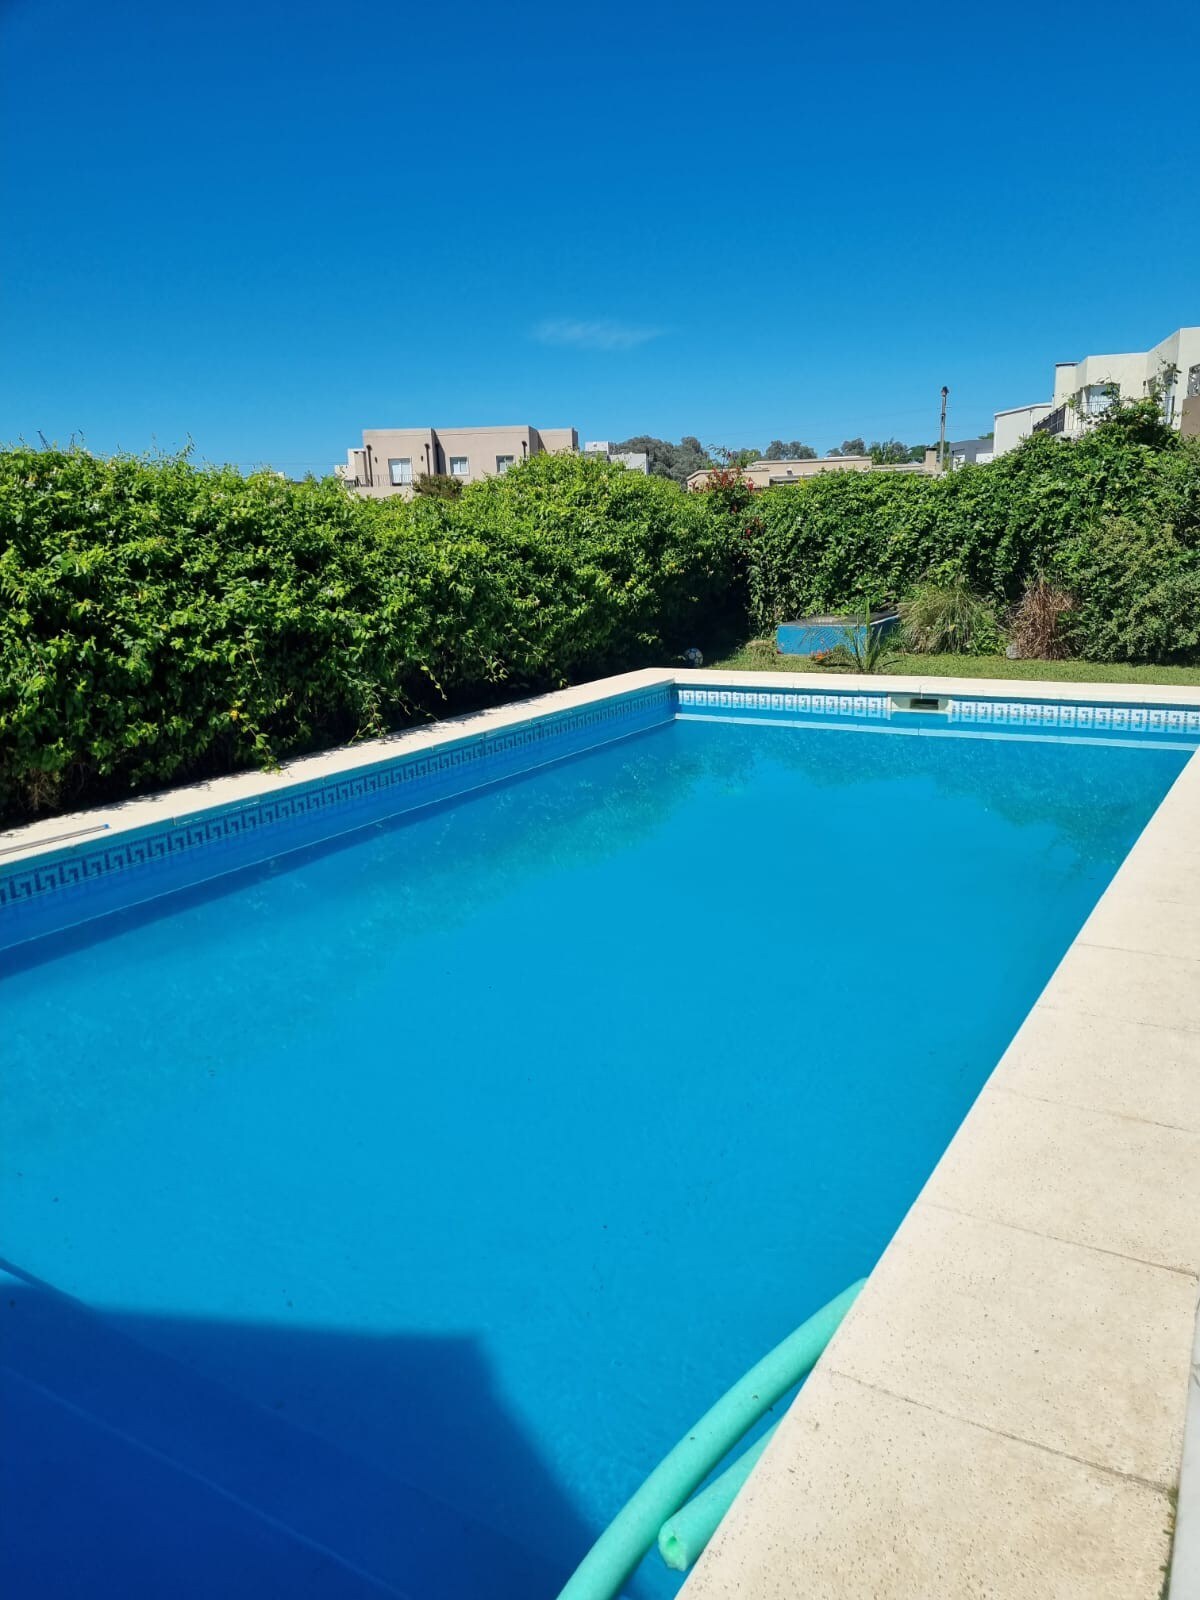 Casa en alquiler en Haras Santa Maria con piscina